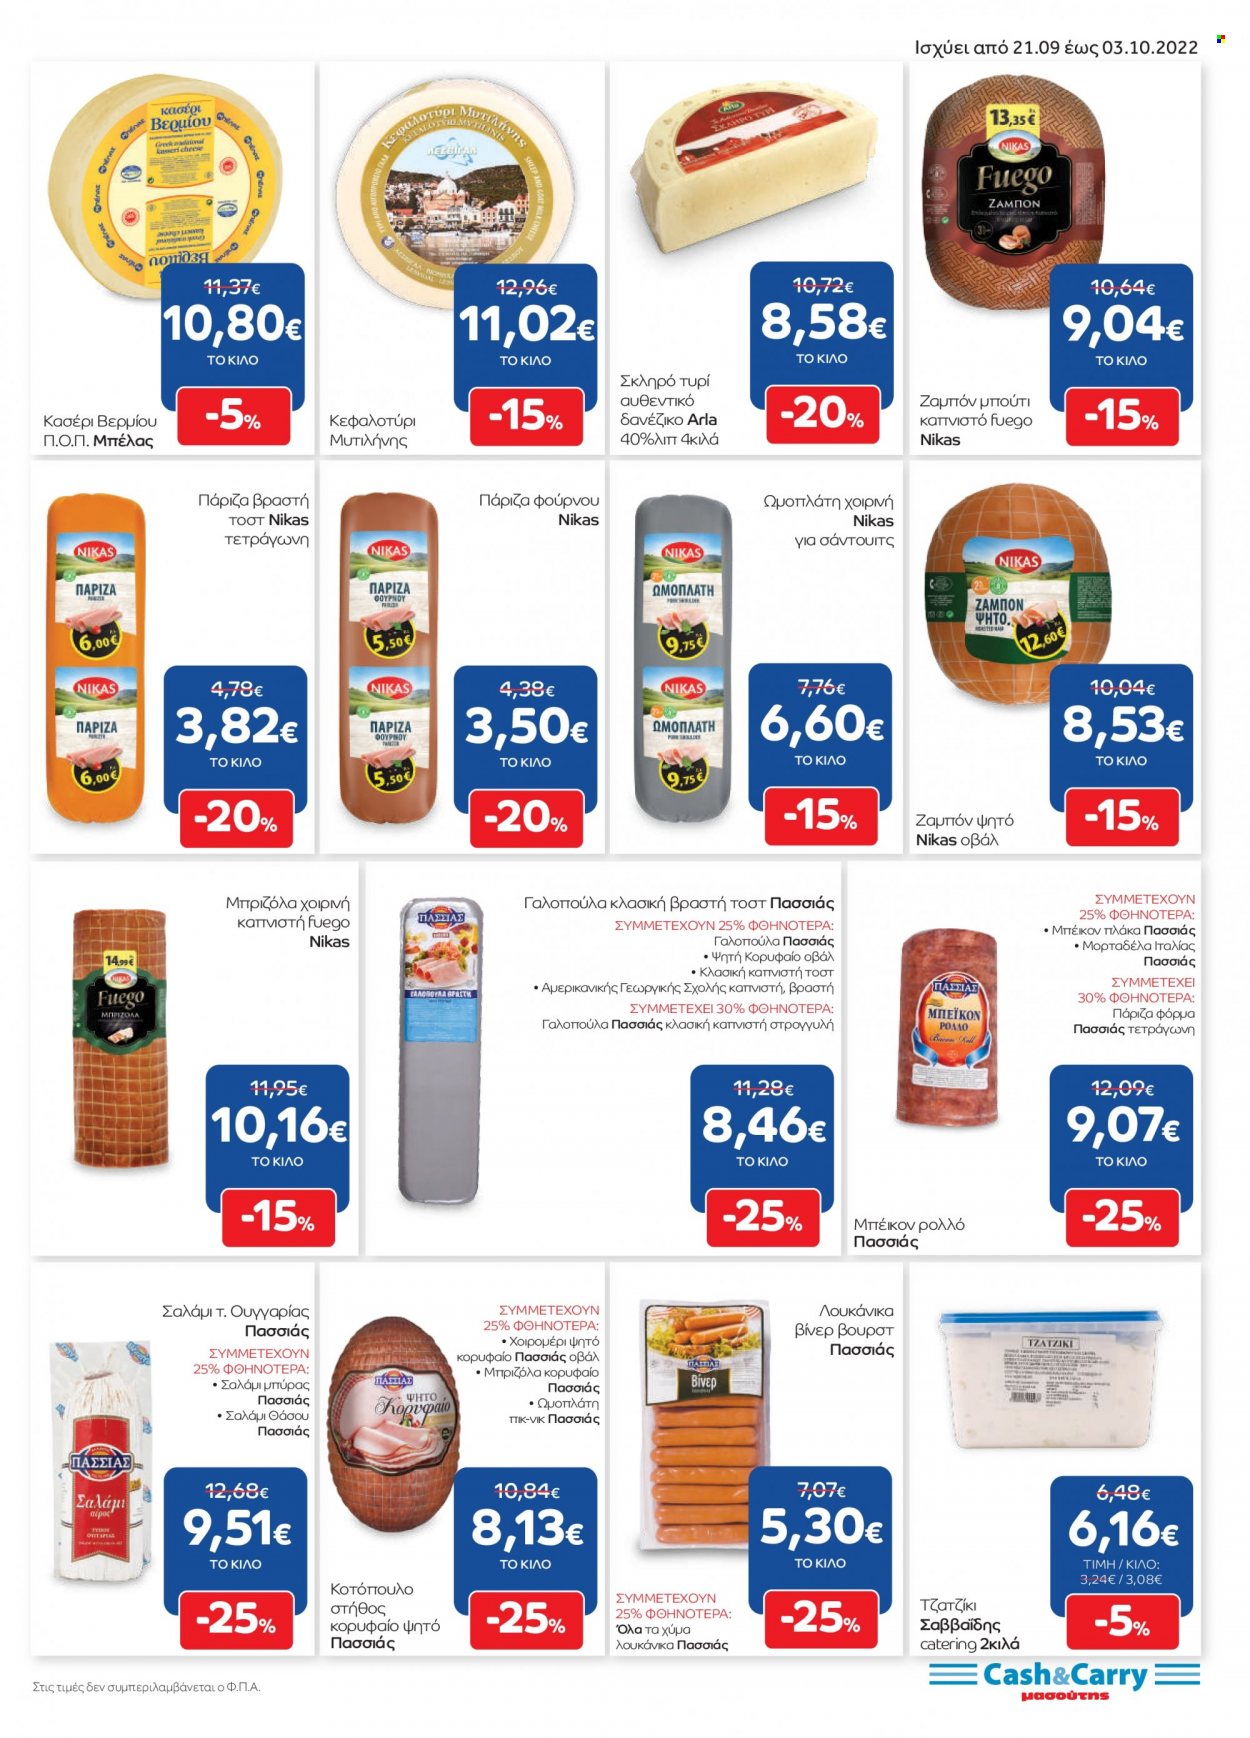 thumbnail - Φυλλάδια Masoutis Cash & Carry - 21.09.2022 - 03.10.2022 - Εκπτωτικά προϊόντα - γαλοπούλα, κοτόπουλο, ζαμπόν, σαλάμι, μπέικον, λουκάνικο, τζατζίκι. Σελίδα 5.